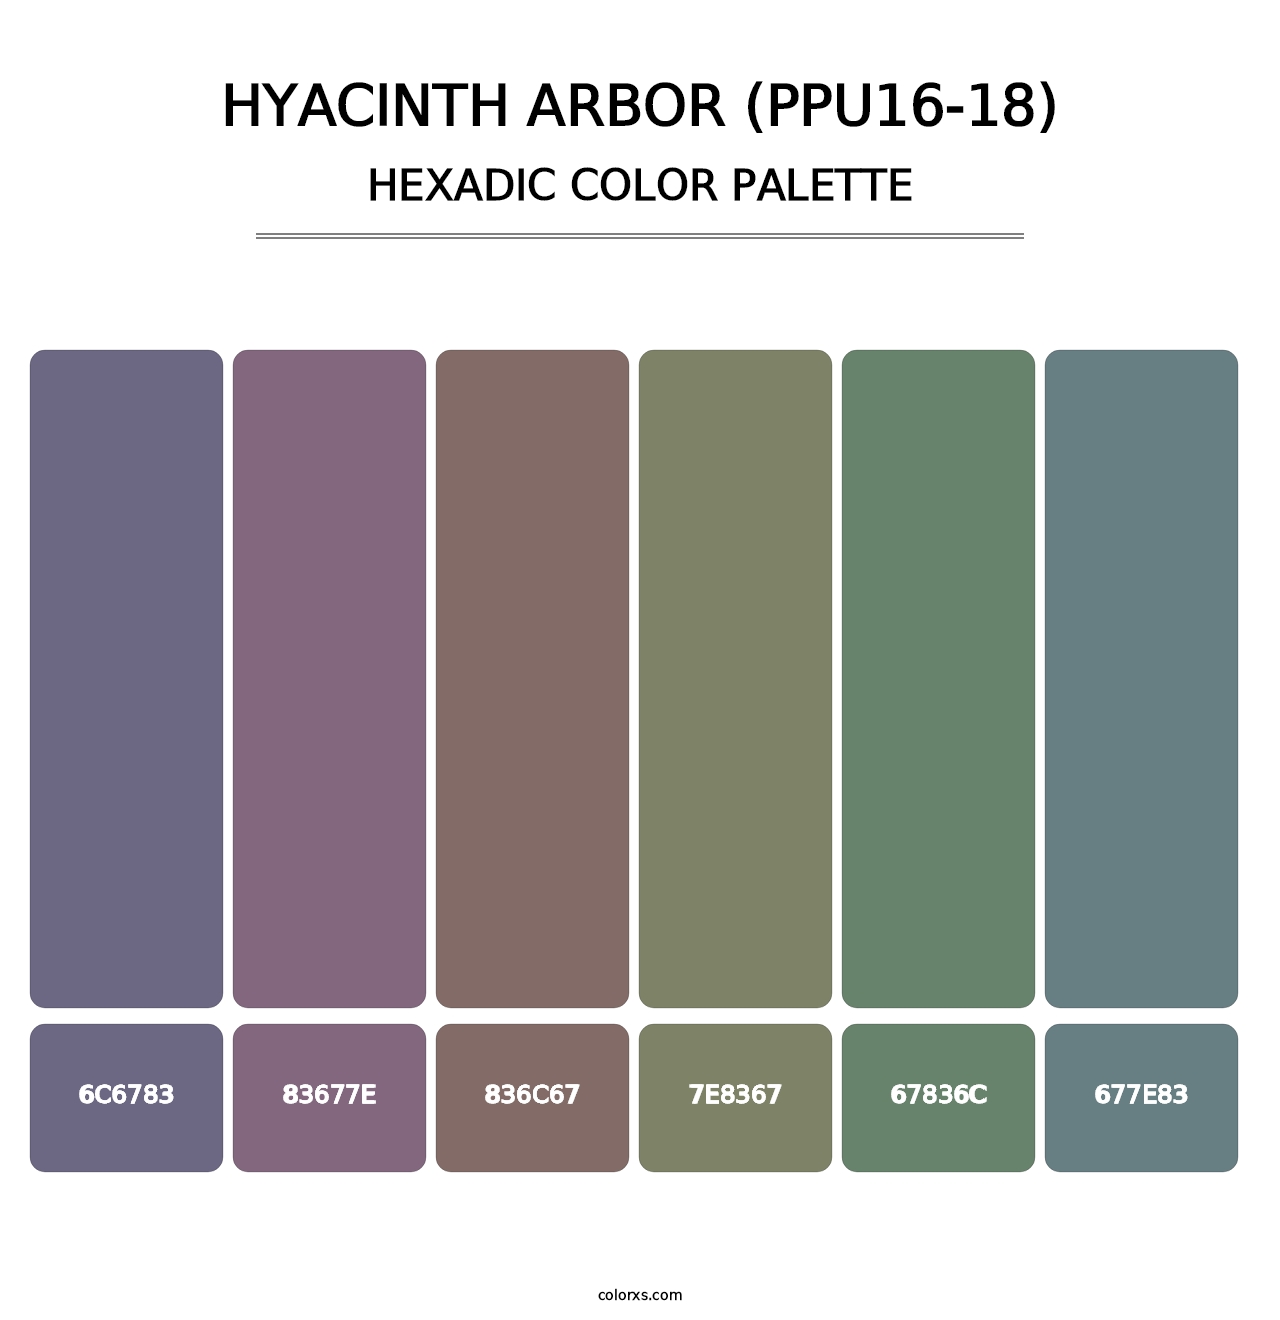 Hyacinth Arbor (PPU16-18) - Hexadic Color Palette